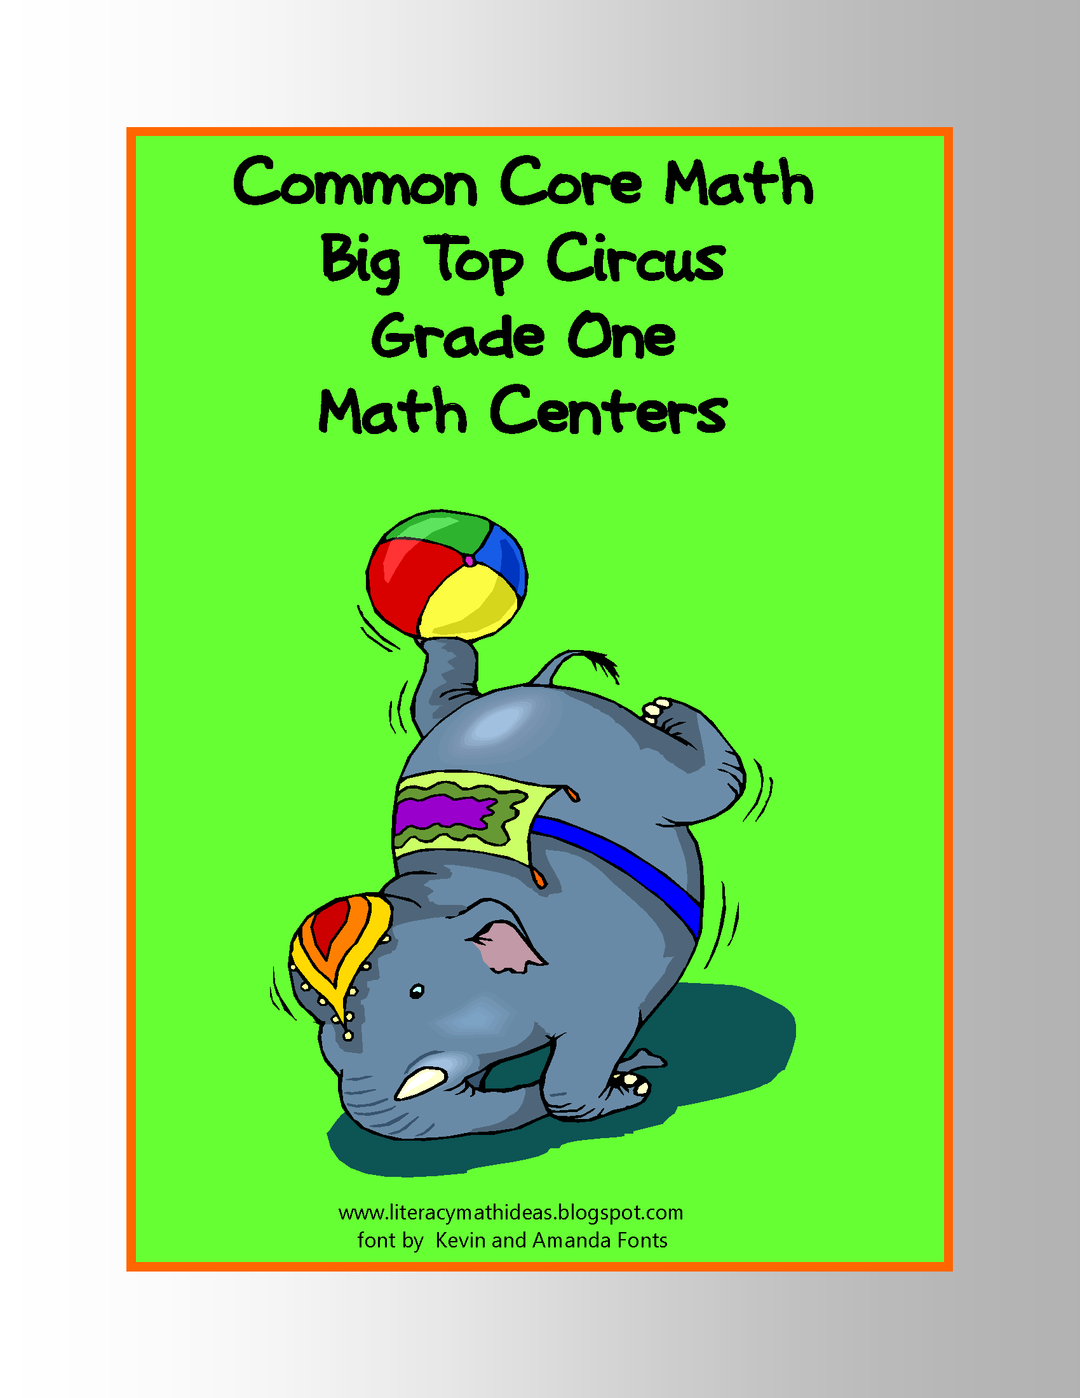 Common Core Standards Math Big Top Circus Games: Grade 1